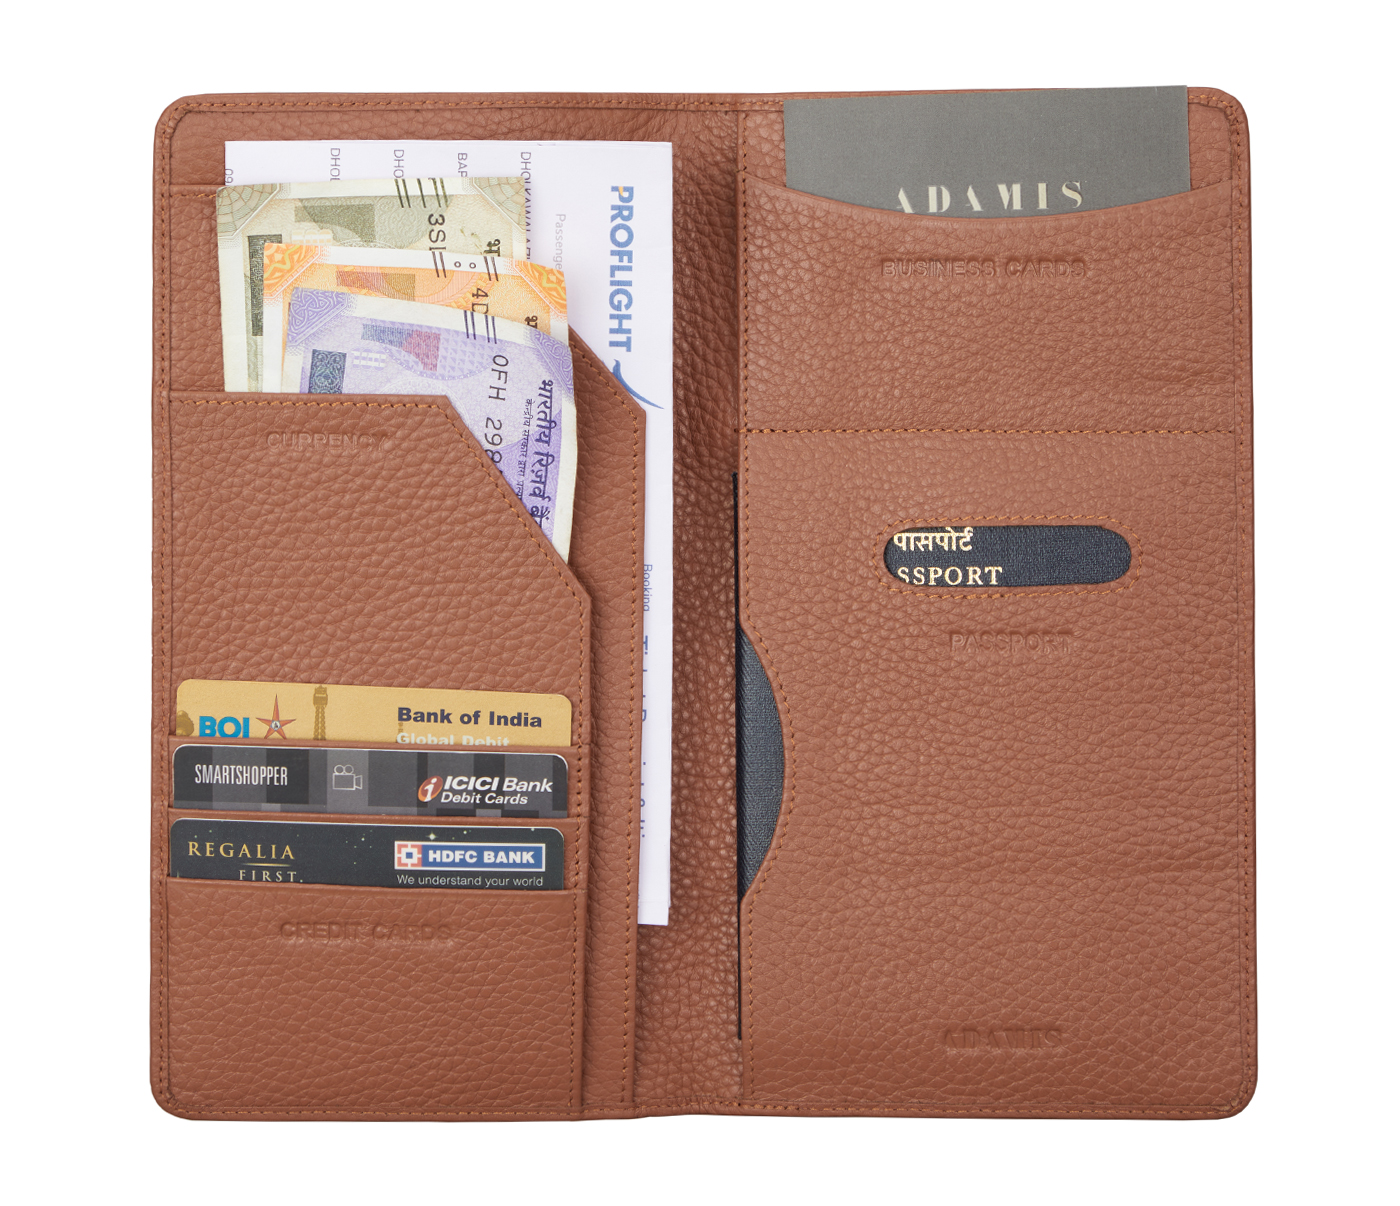 W85-Rafel-Travel document wallet in Genuine Leather - Tan